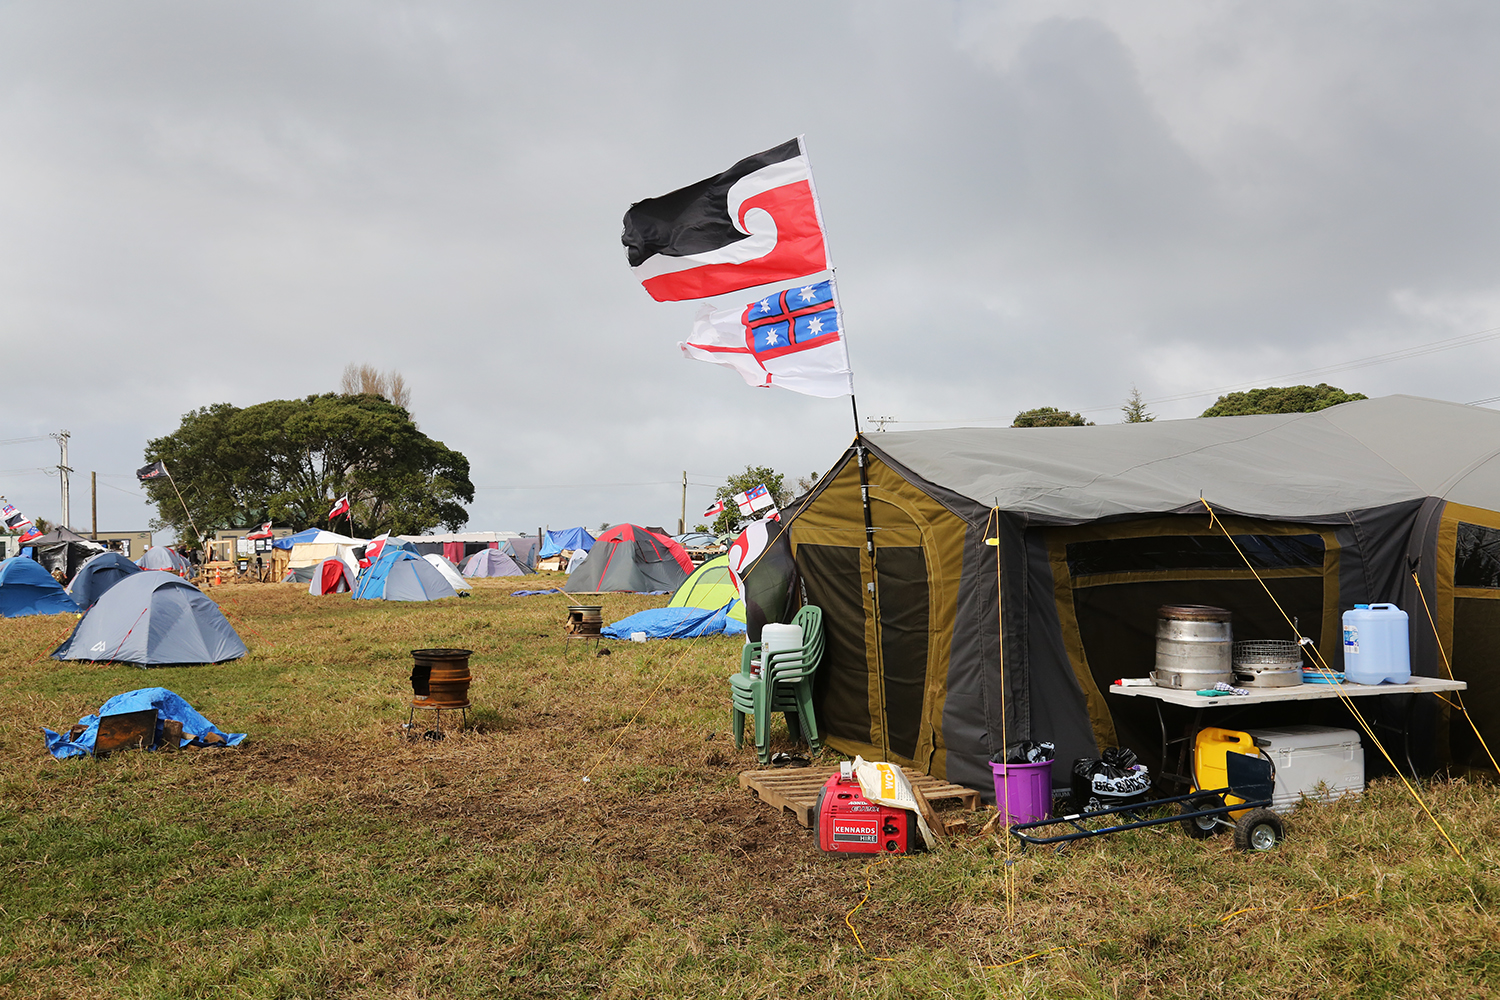 Maori Land Protest : Ihumatao : Auckland : New Zealand : Richard Moore : Journalist : Photographer :